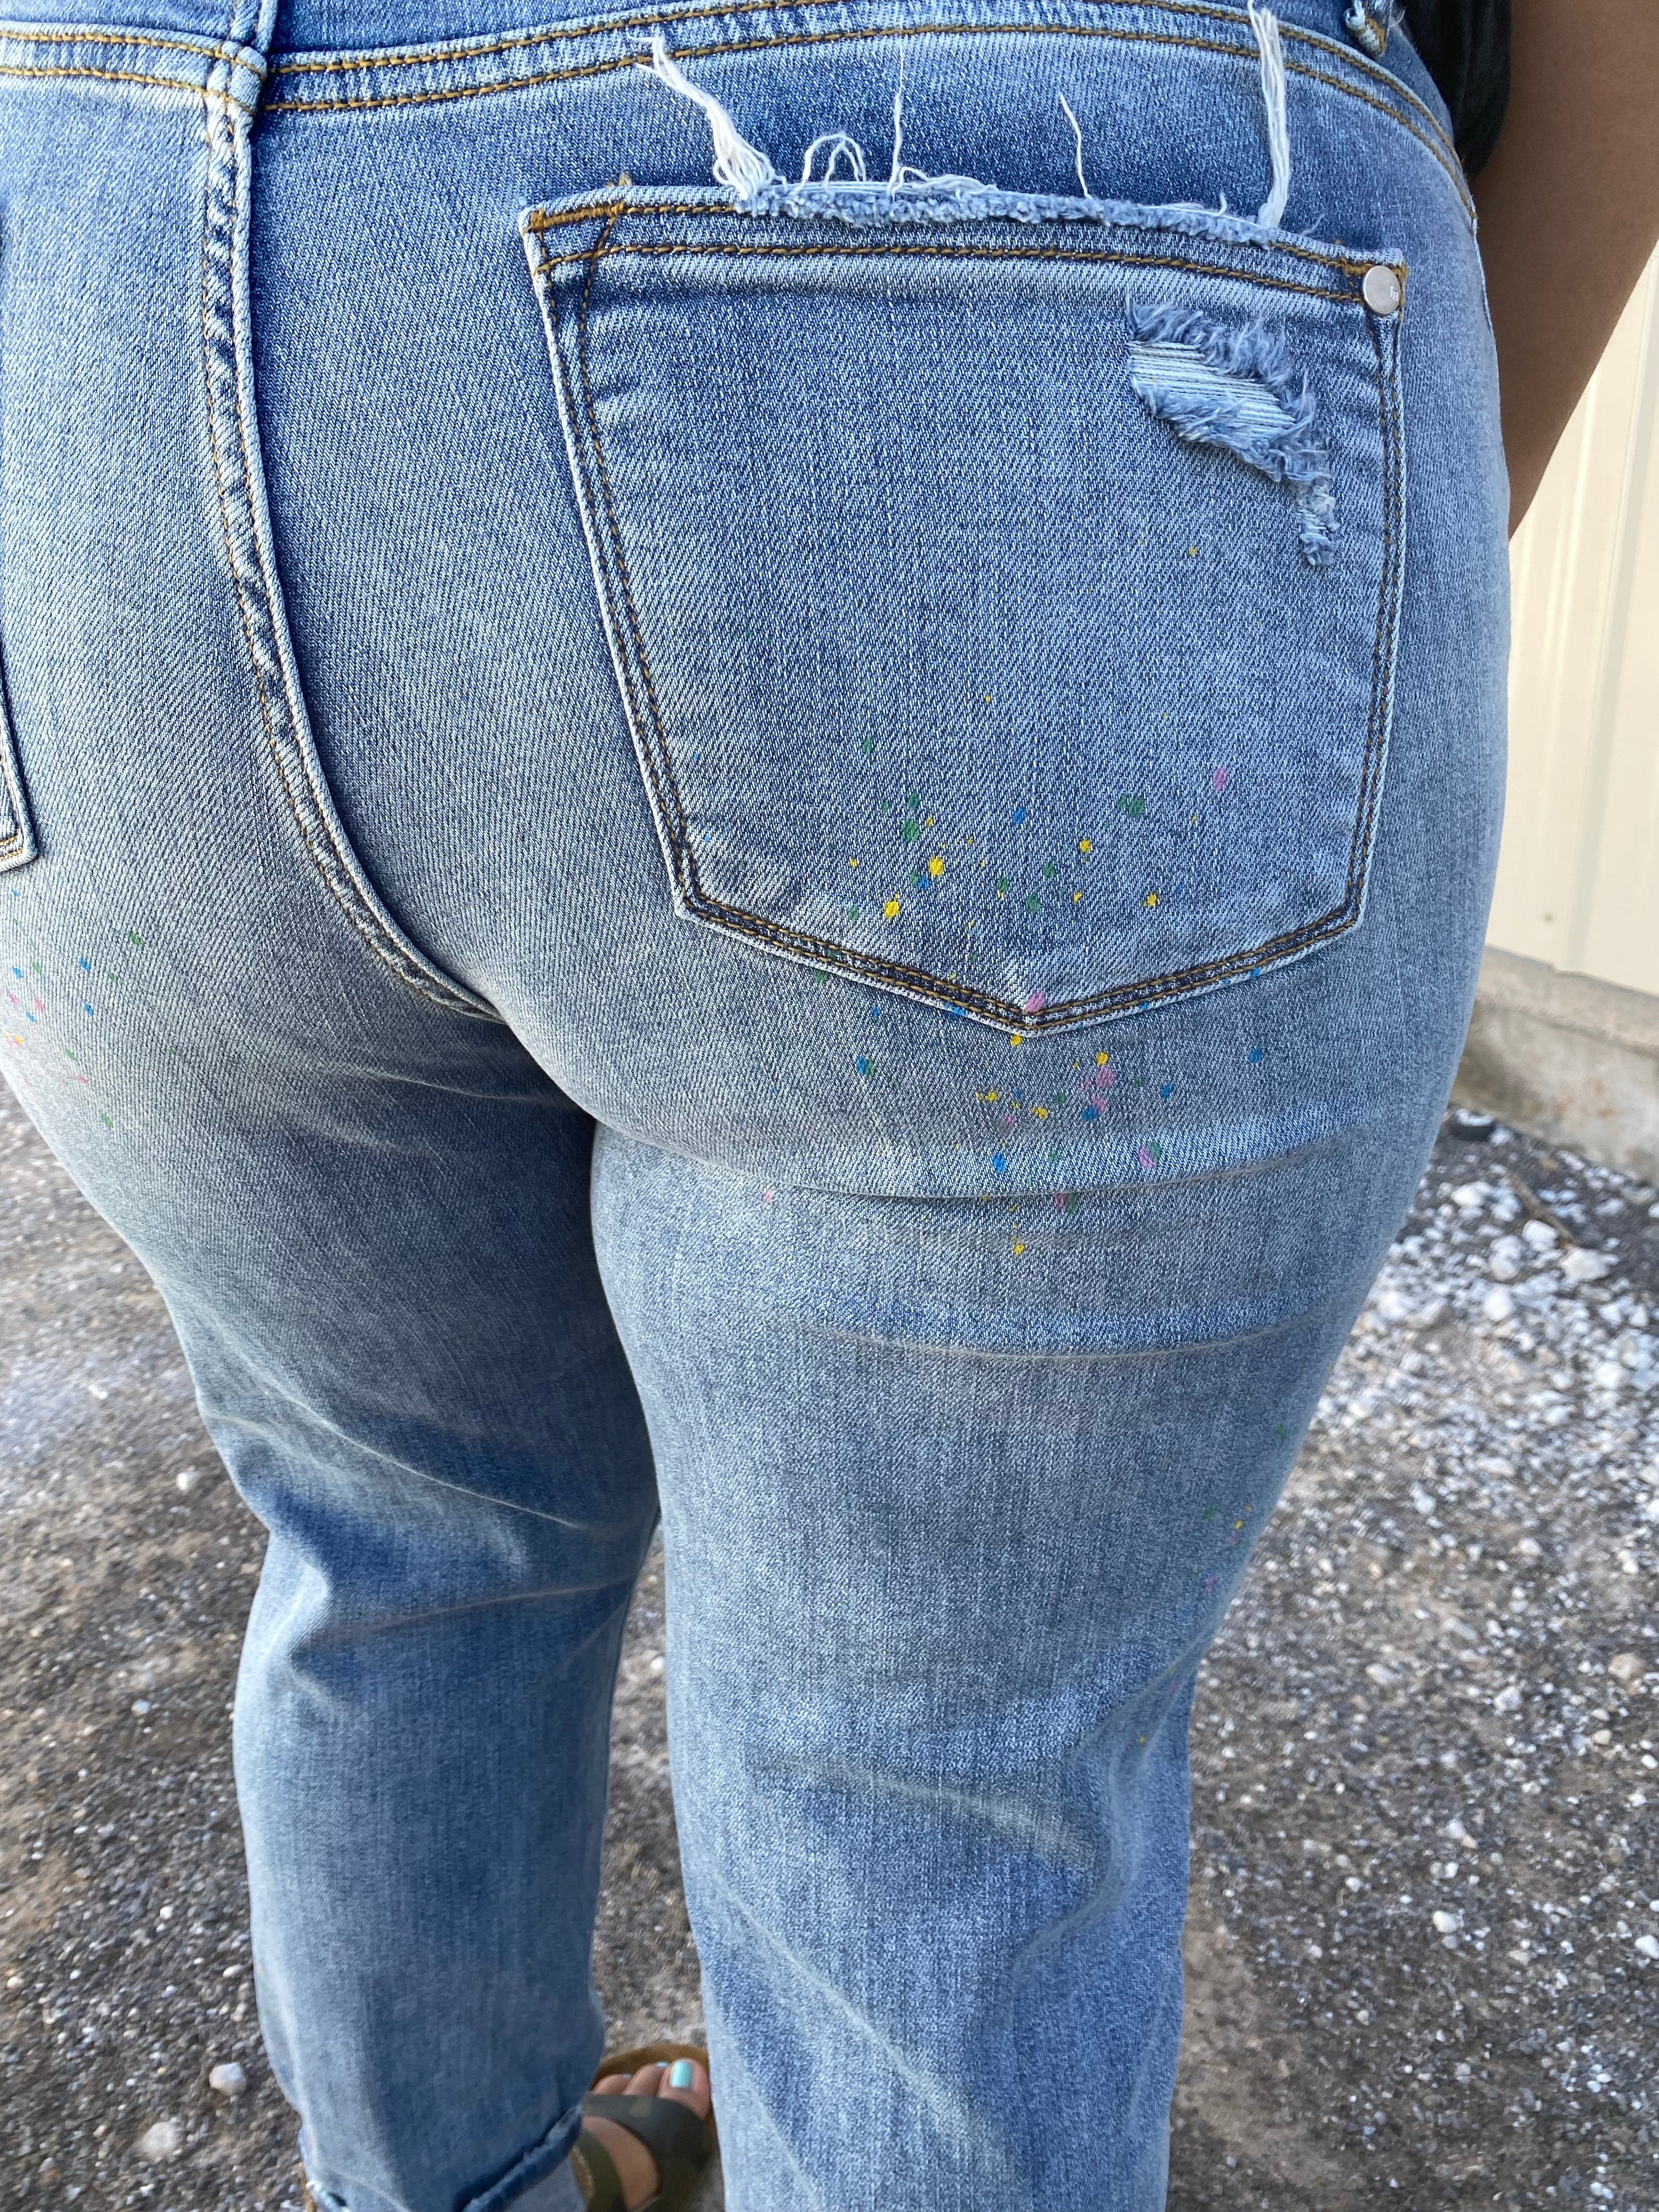 LUCKY CHARMS} Judy Blue Mid-Rise Paint Splatter Boyfriend Jeans